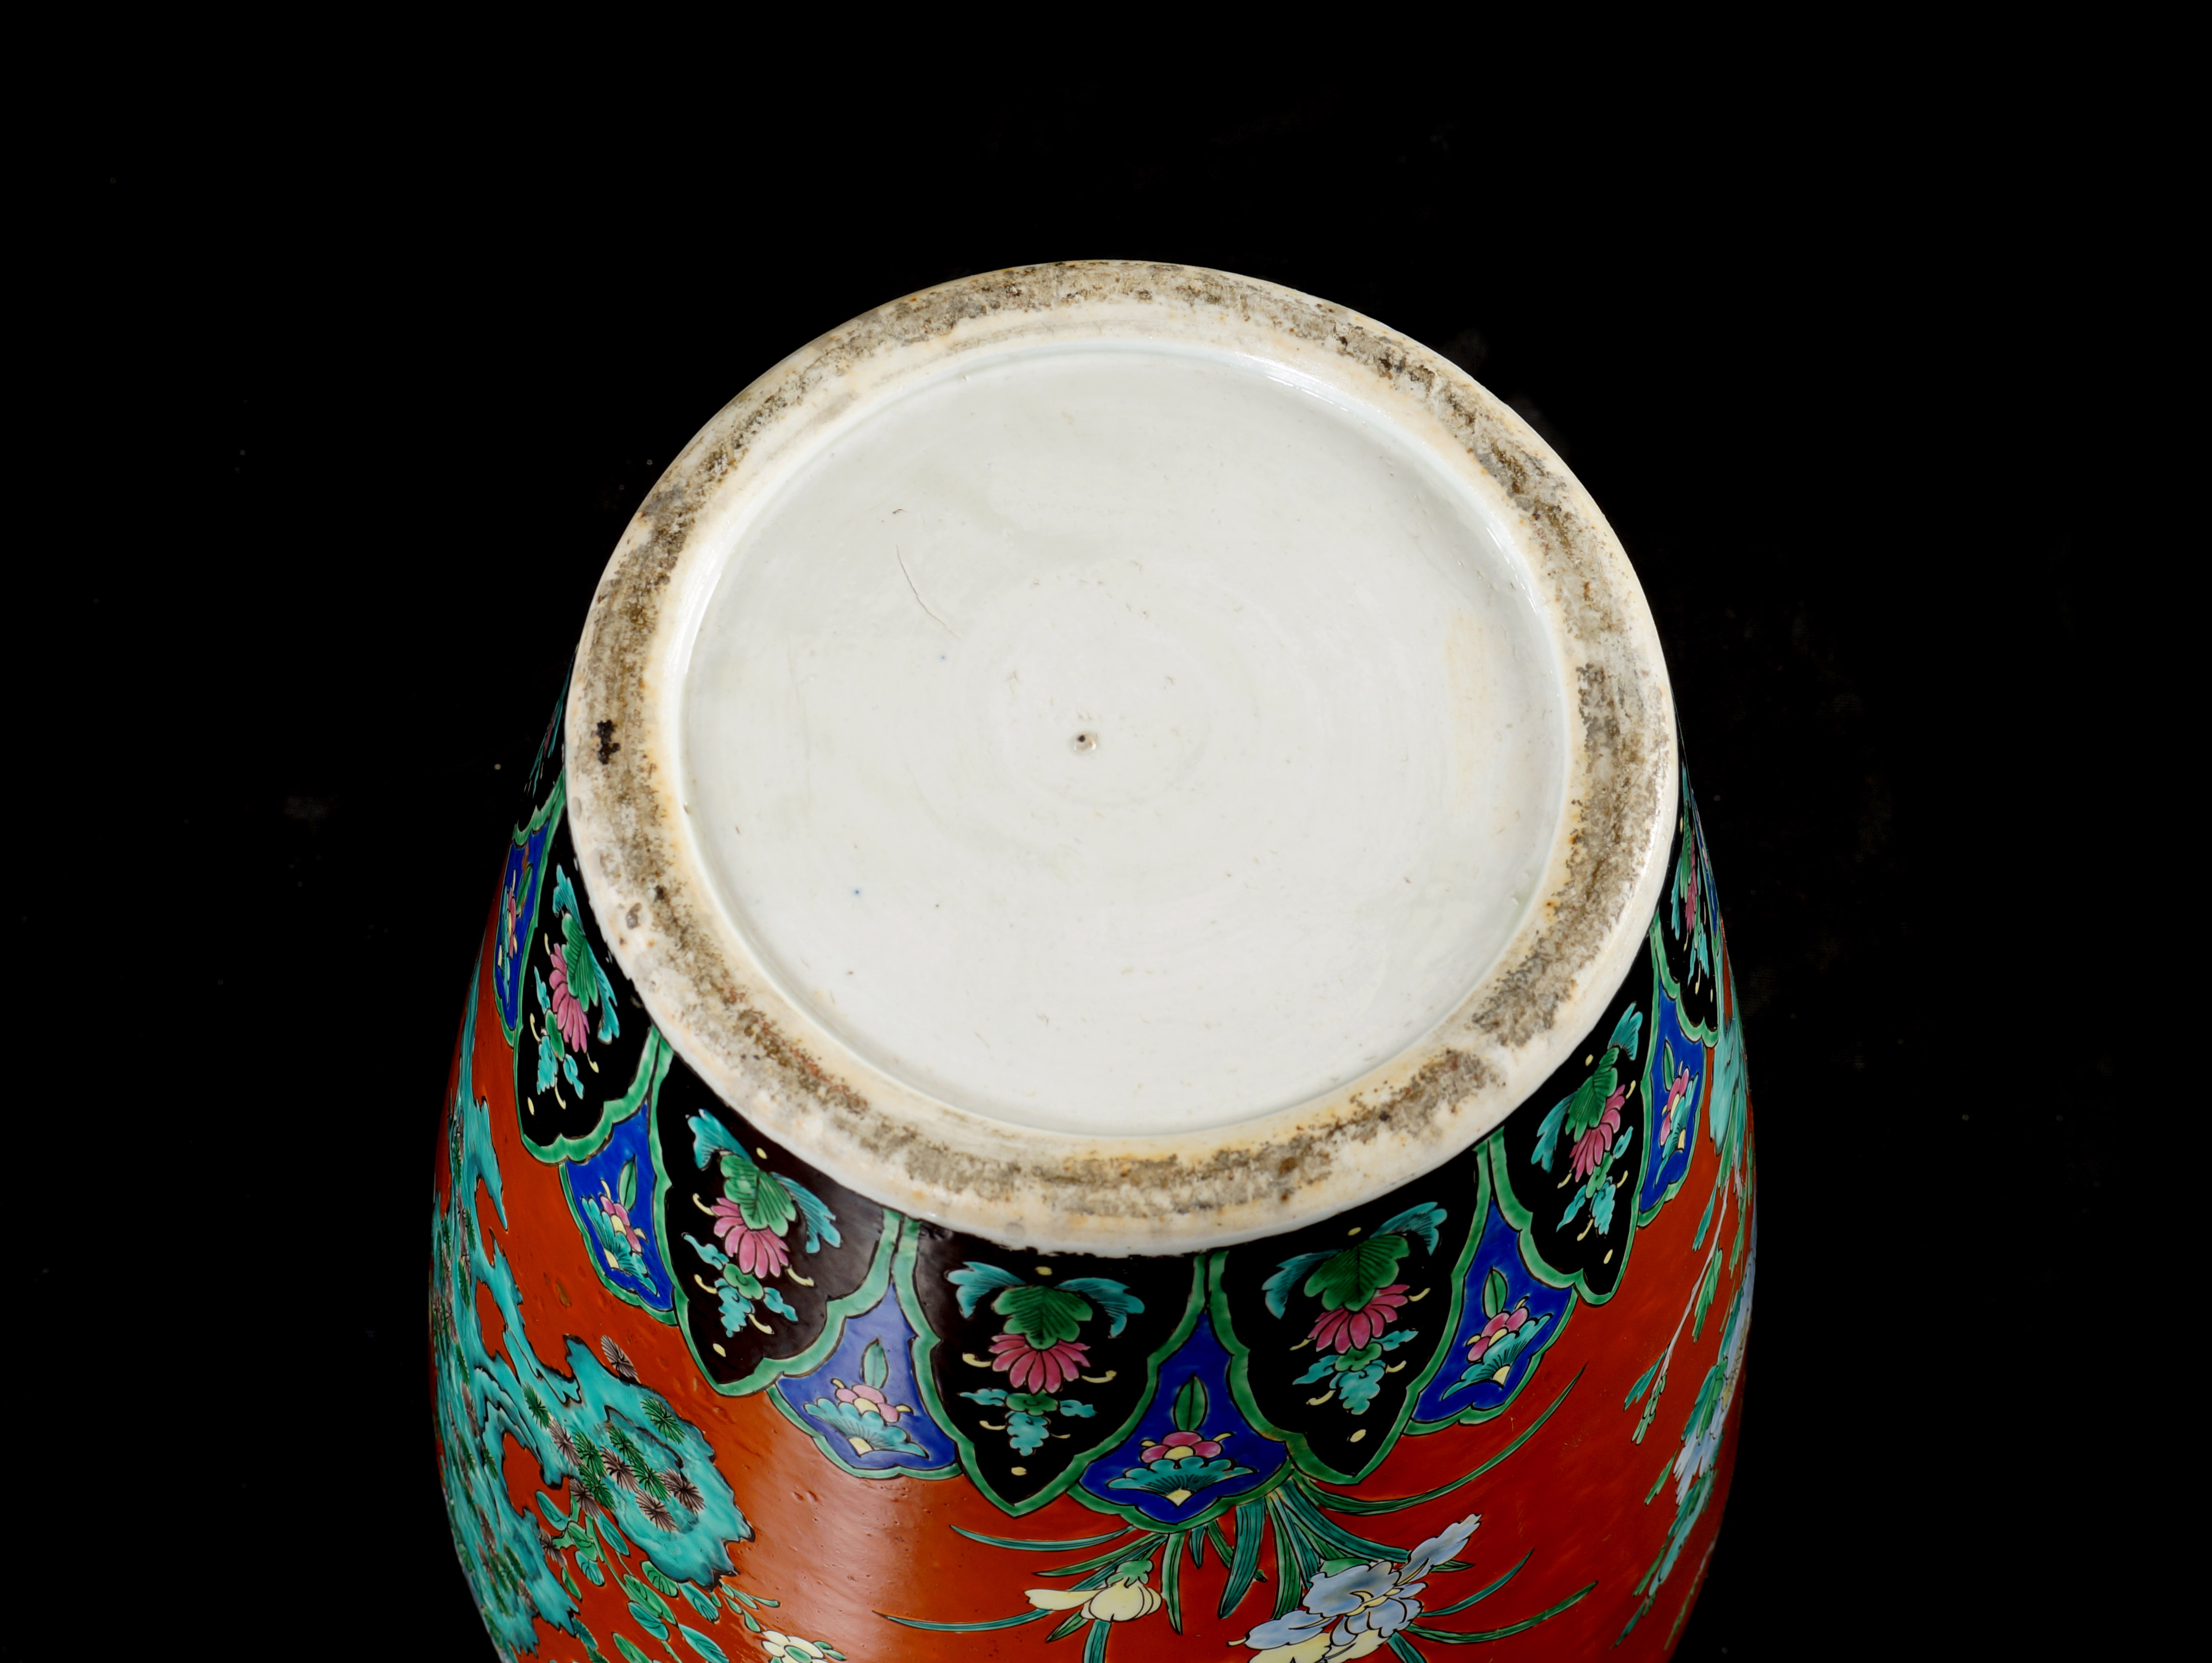 A polychromatic porcelain vase China, antique manufacture h. 70 cm. - Image 5 of 5